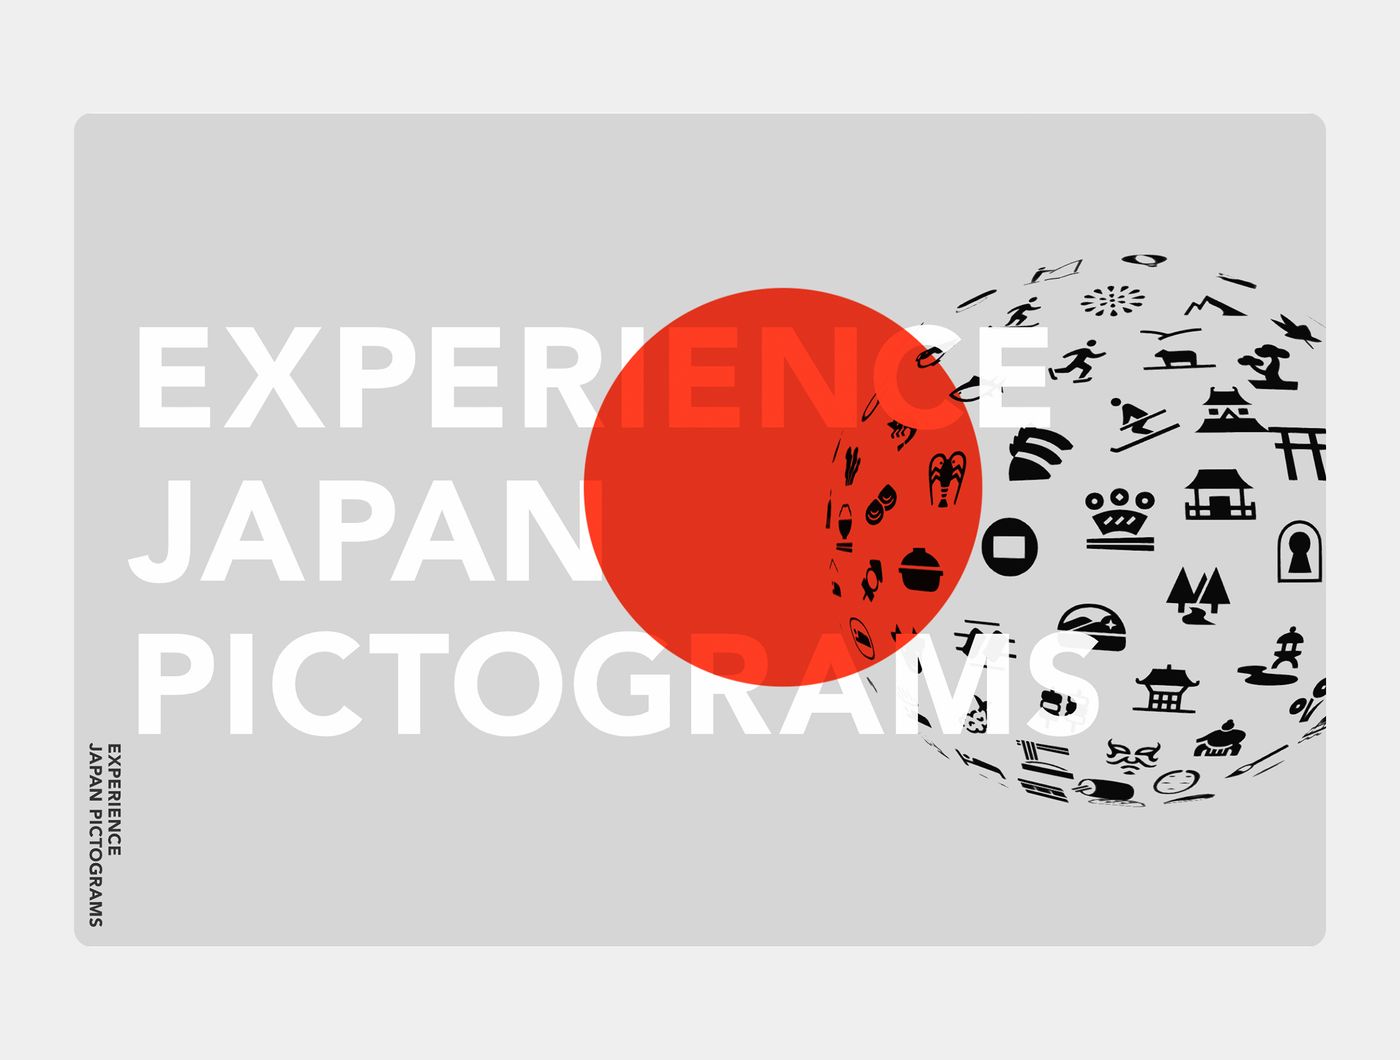 EXPERIENC JAPAN PICTOGRAMS